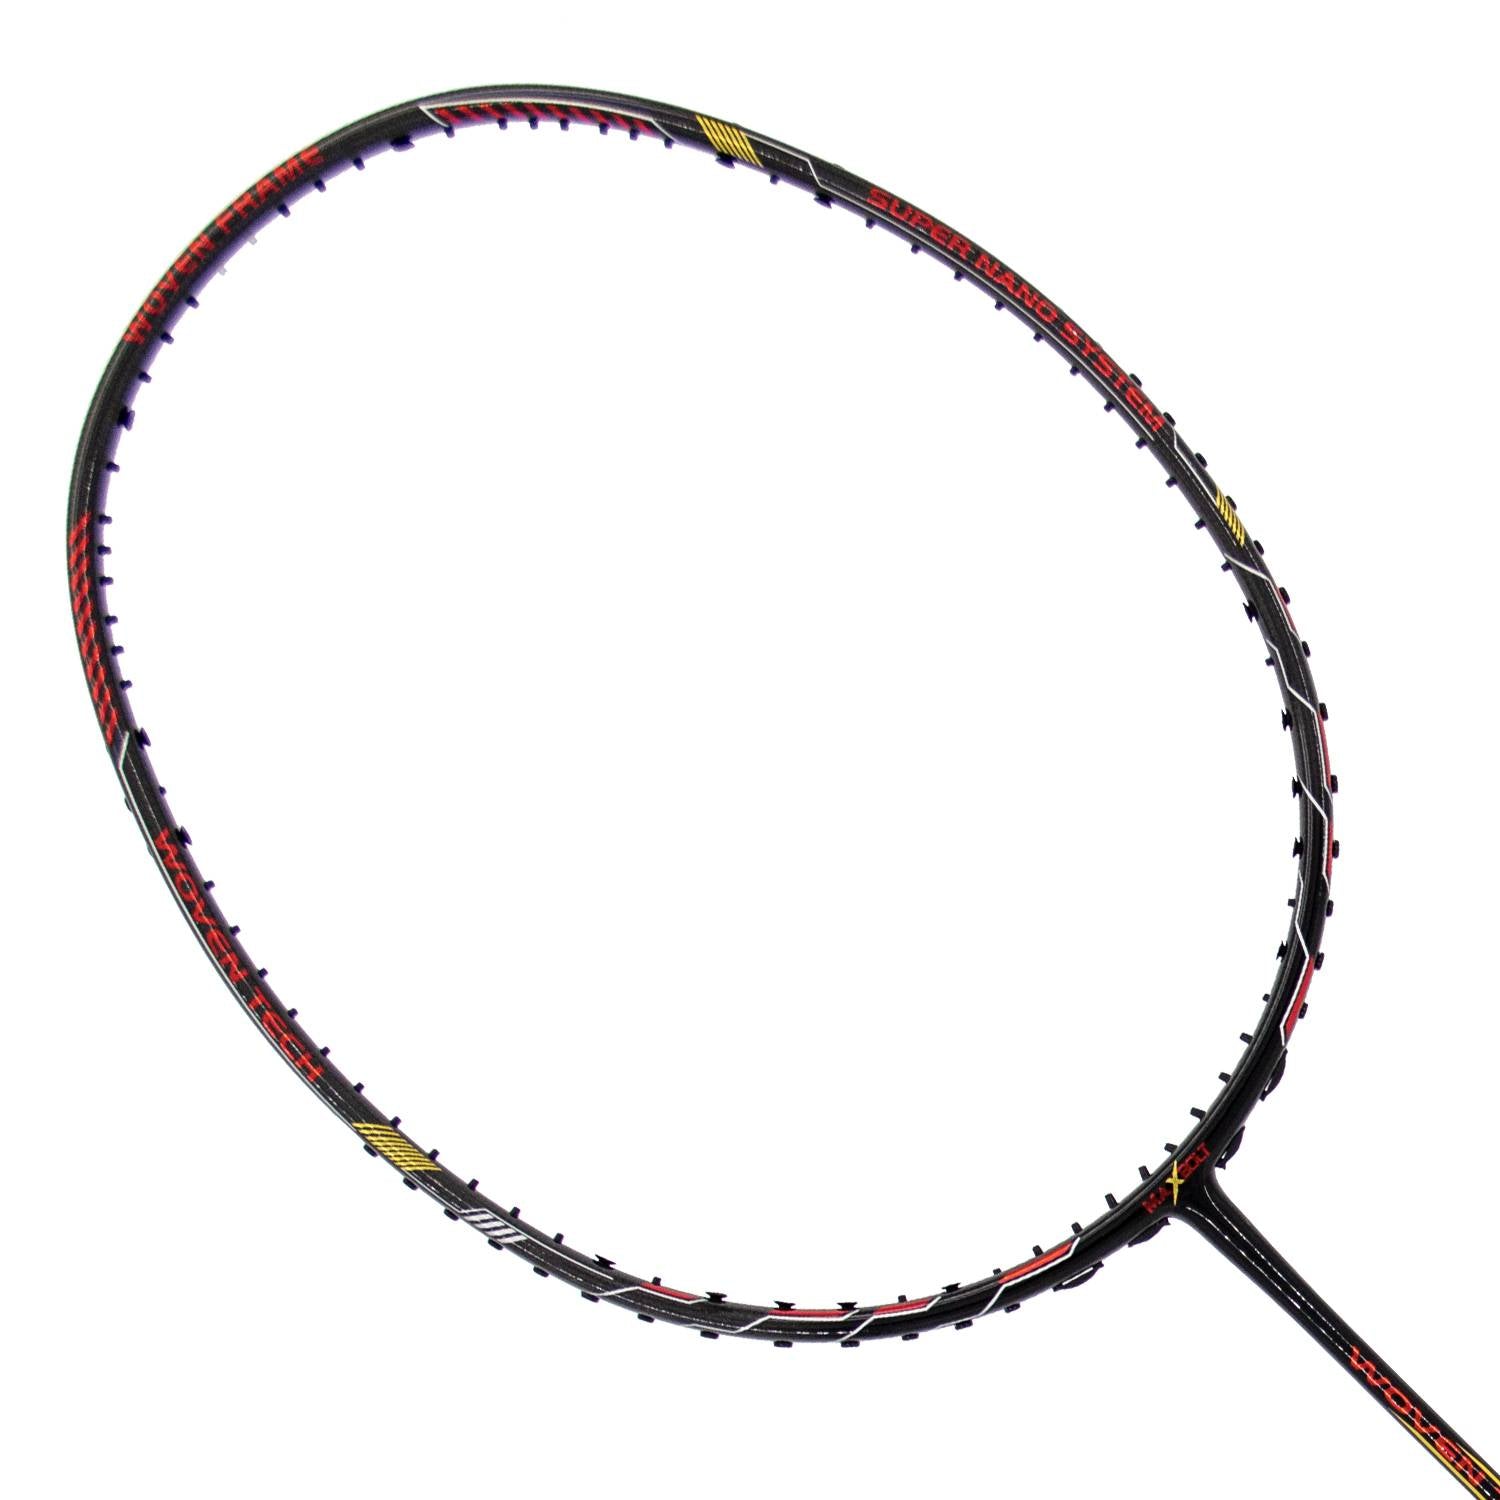 Maxbolt Woven Tech 60 Badminton Racket - Red/Black